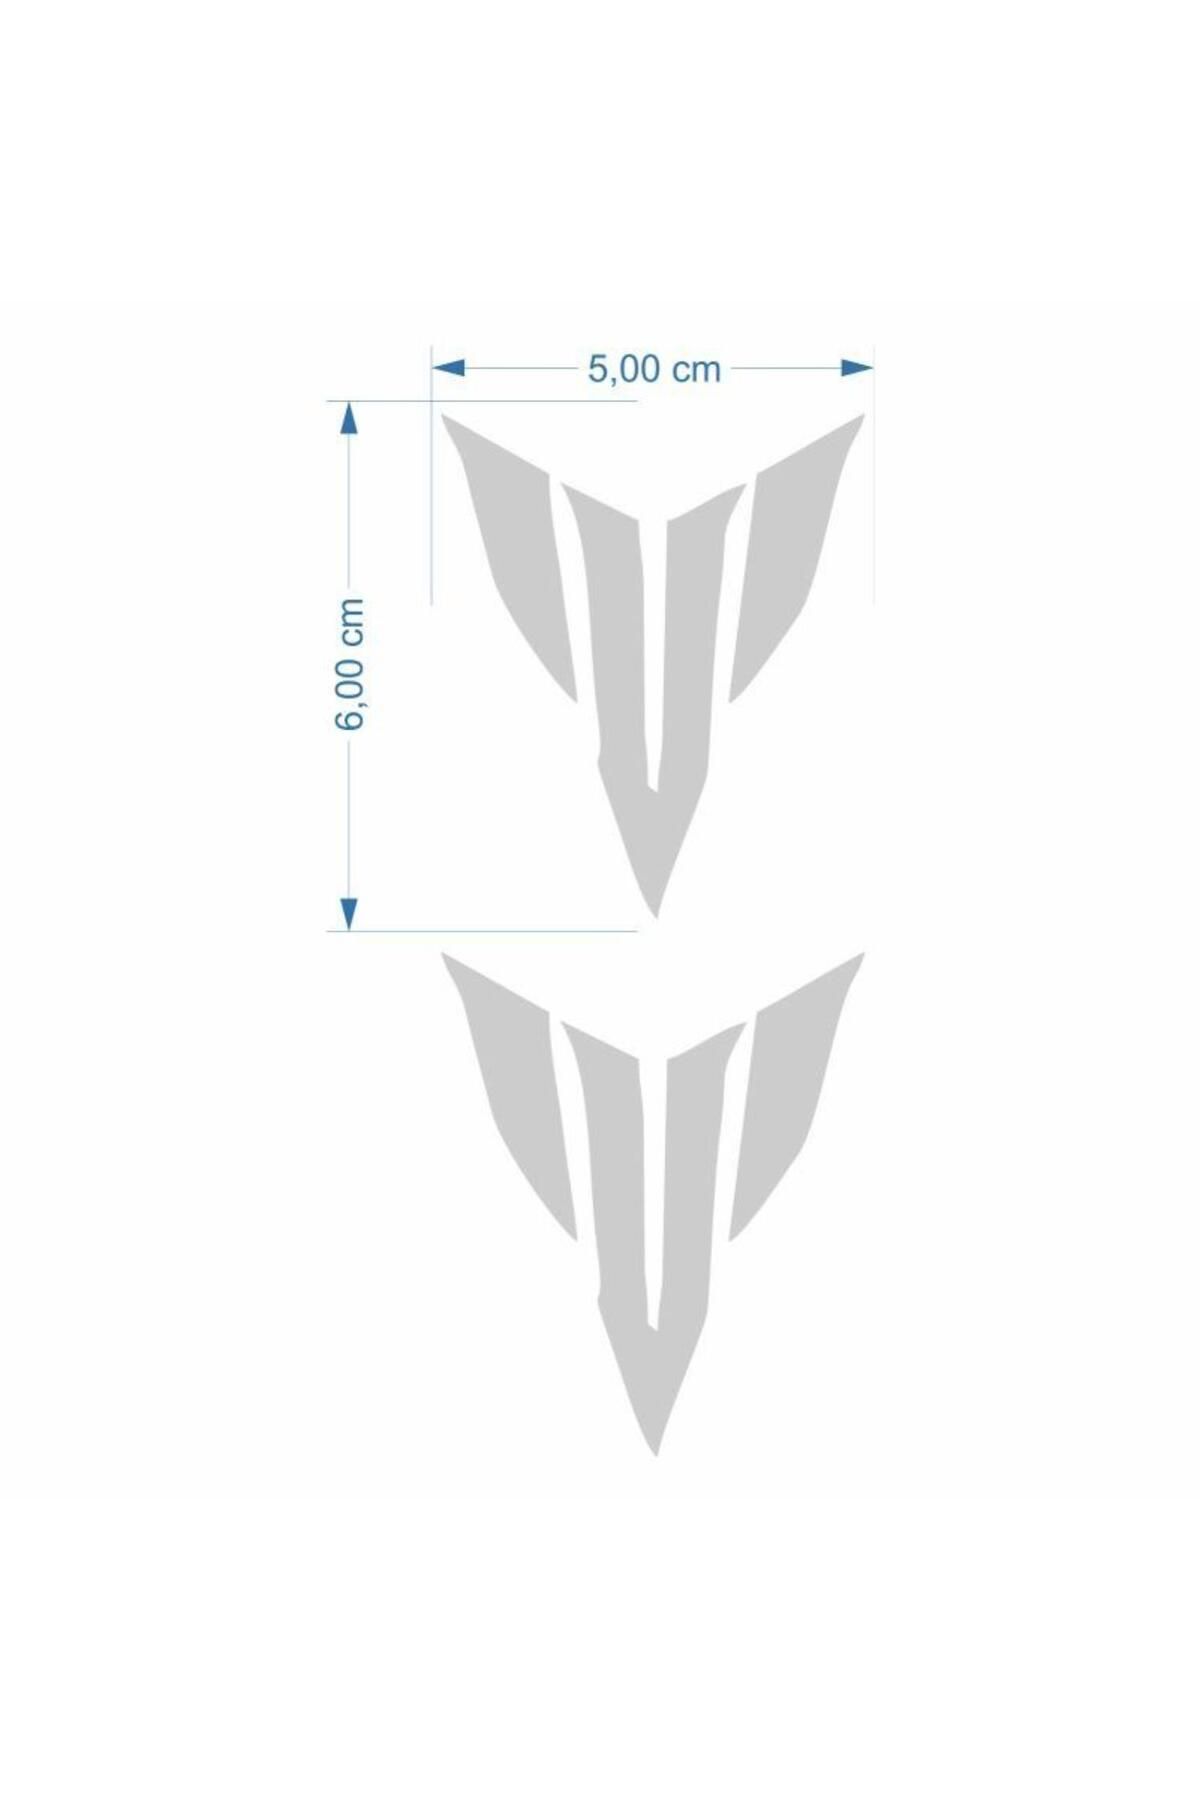 All metal Visor for yamaha mt-15 in accessories design like  transformer/joker/skull/venom/mt-15 logo… | Instagram